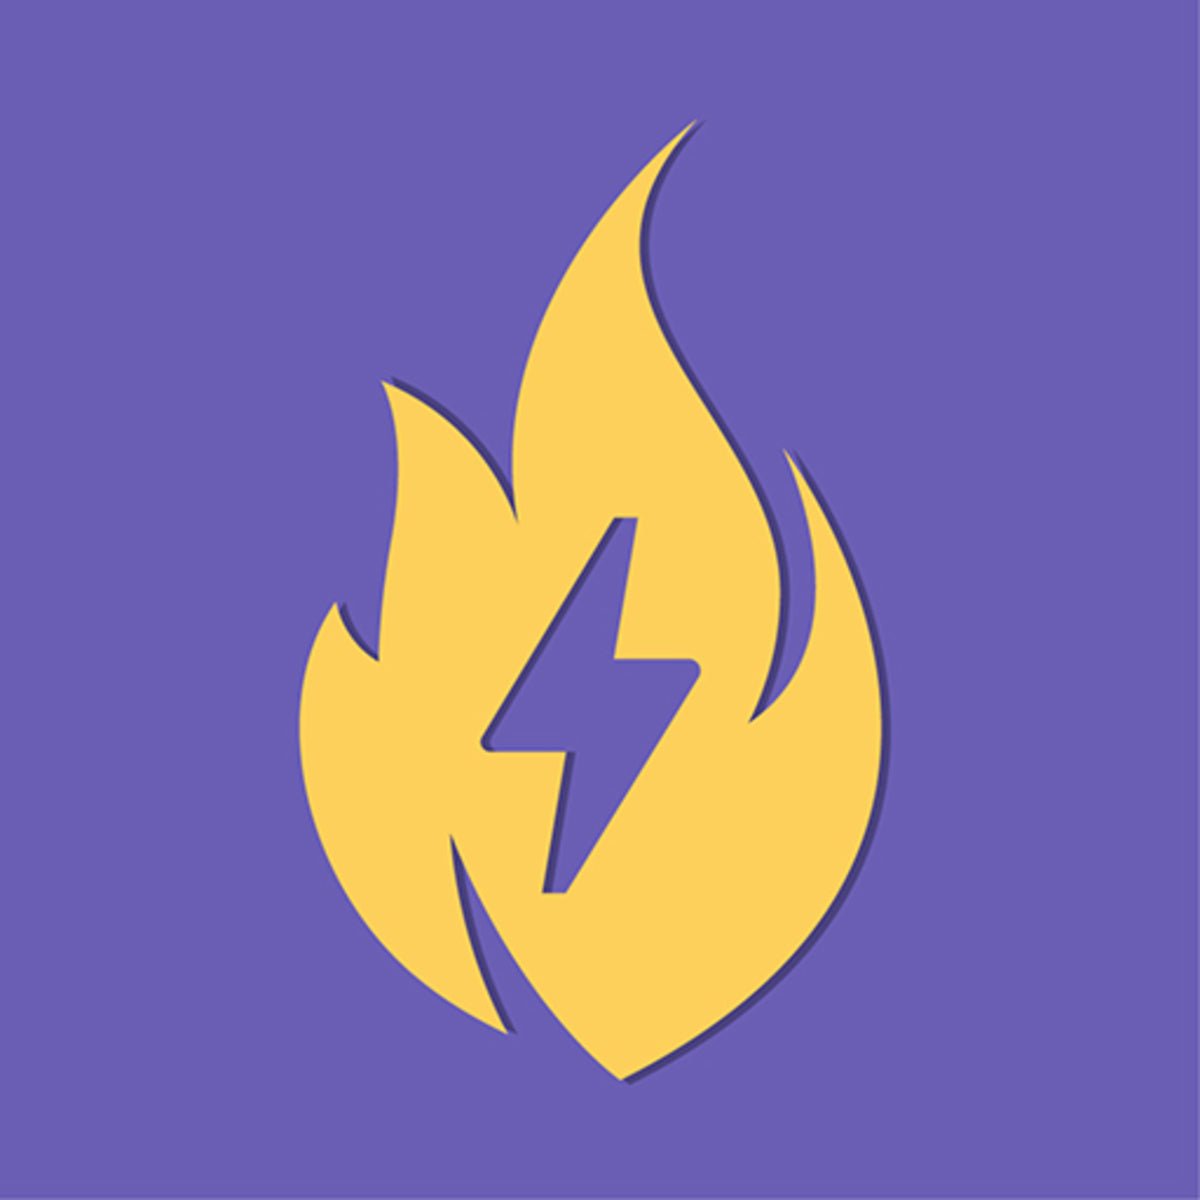 Fire AMP Shopify App